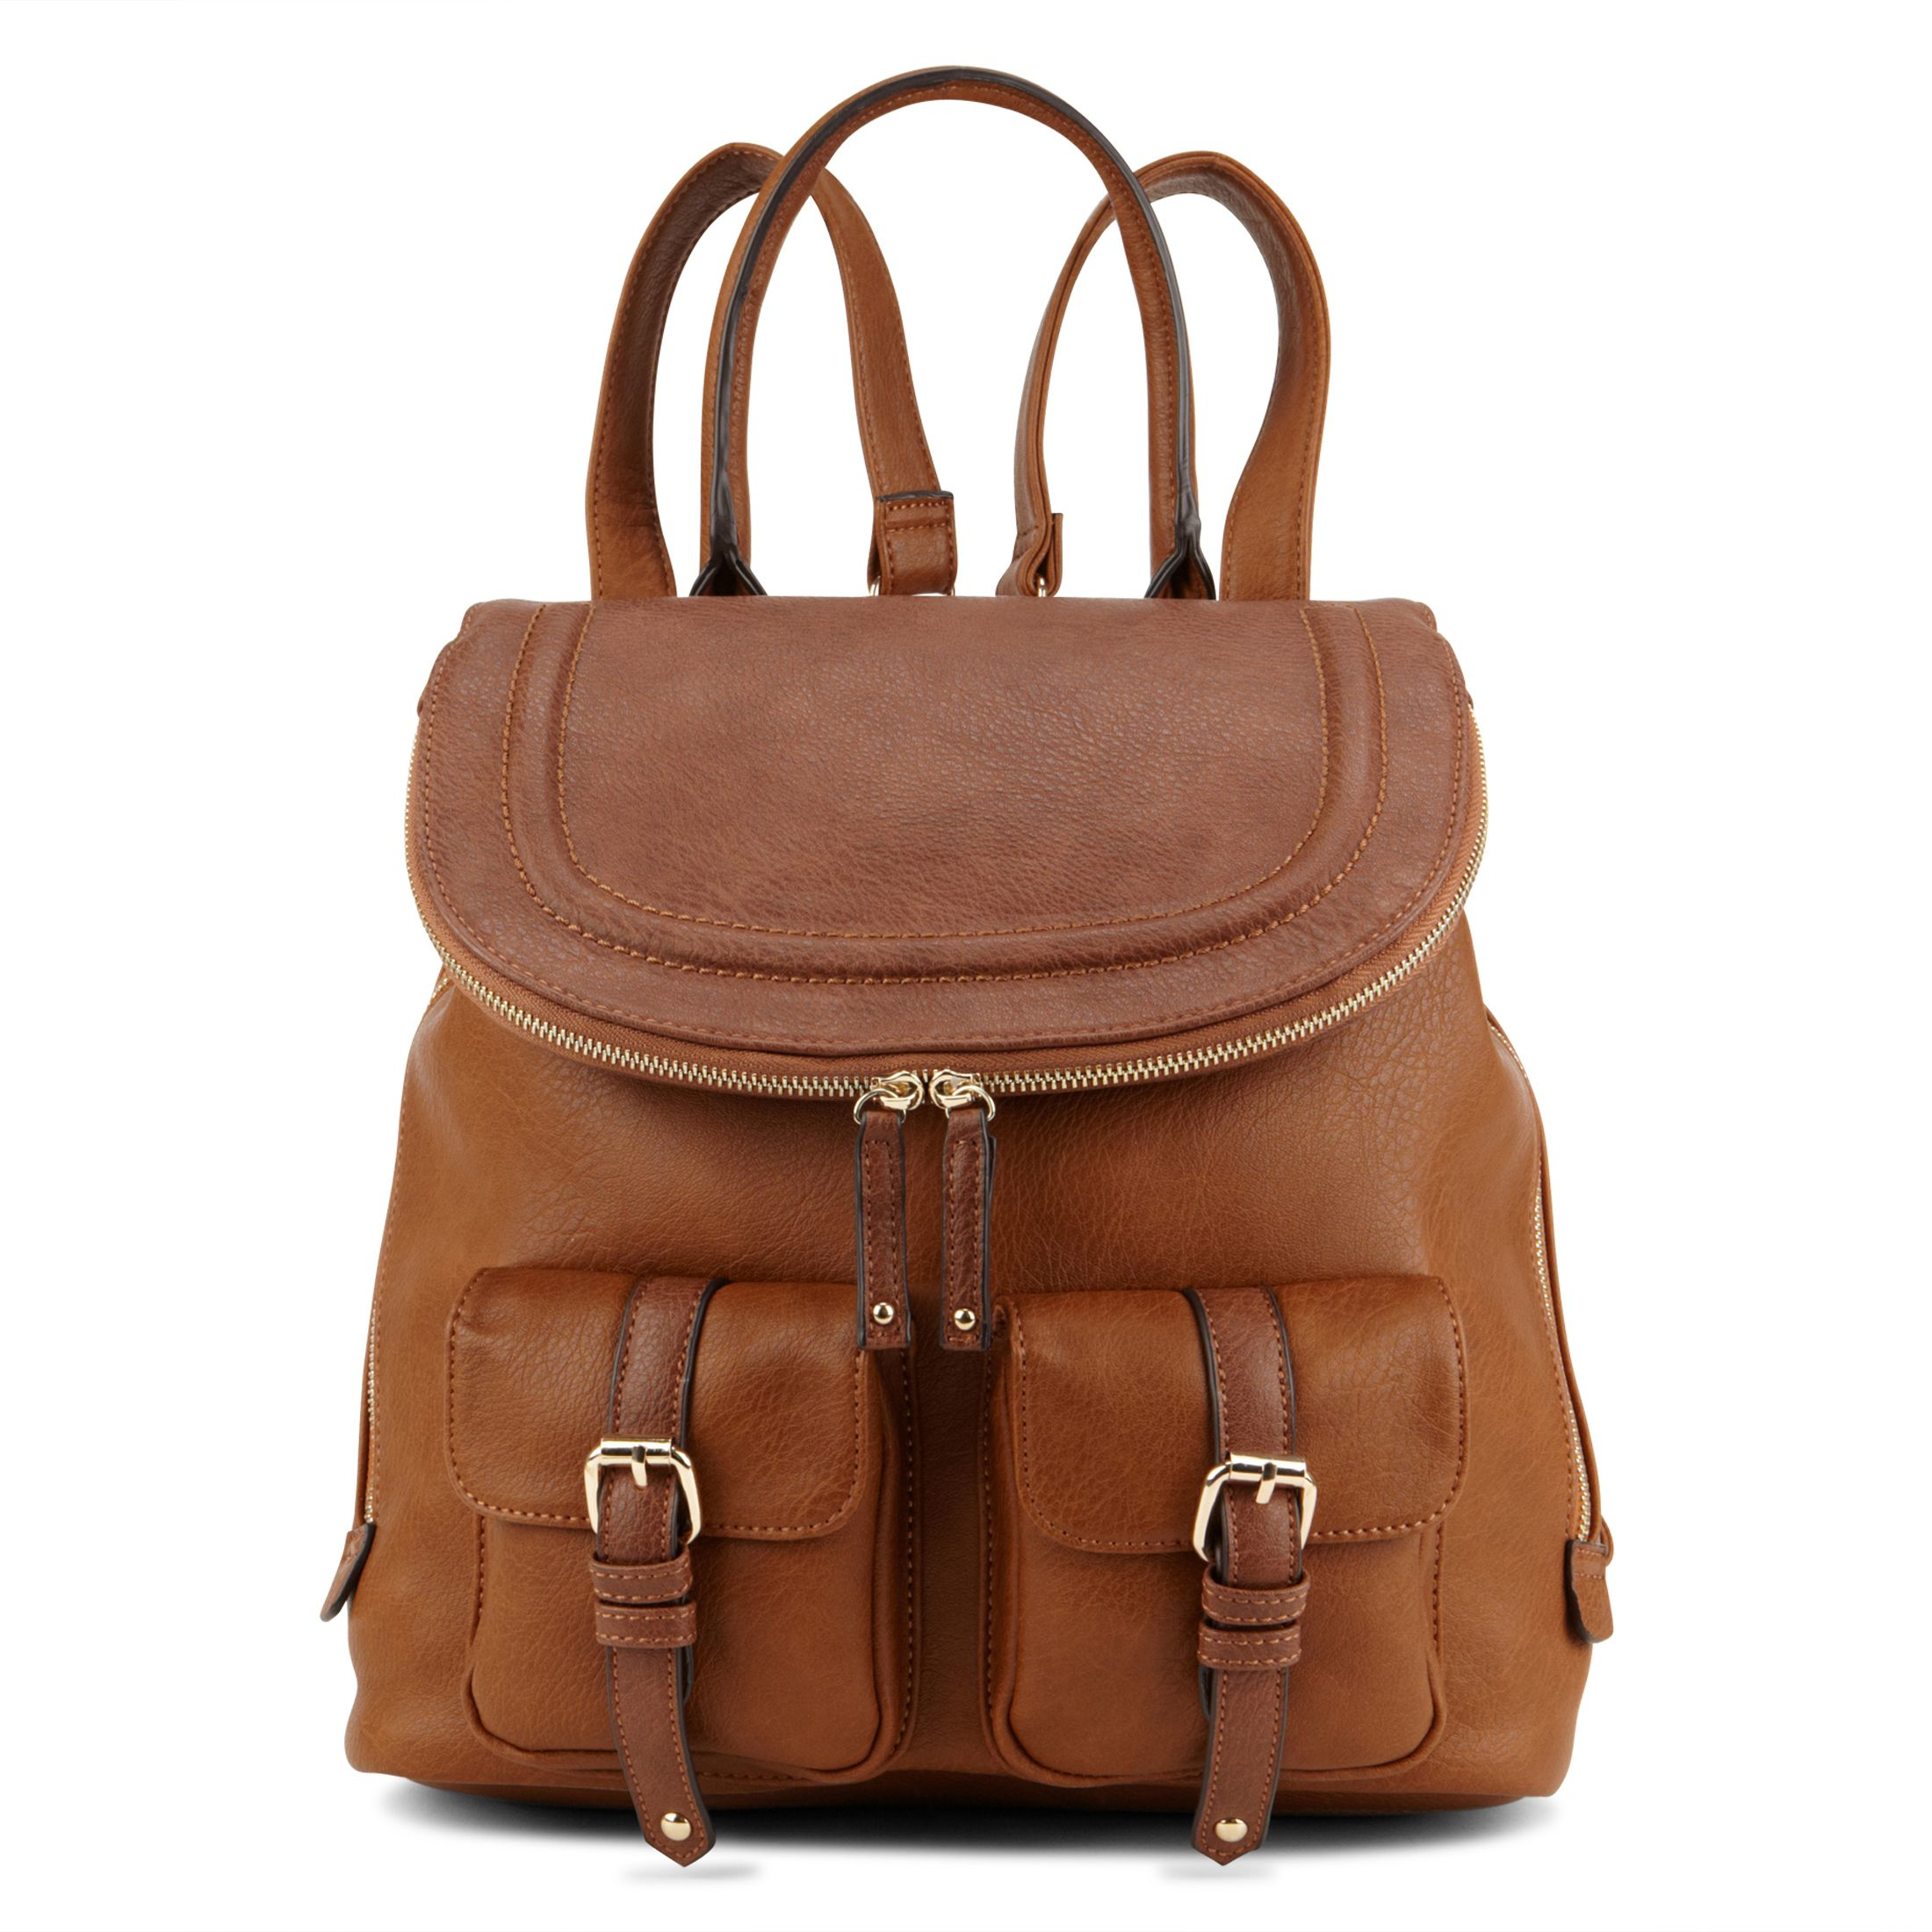 Aldo Botton Buckle And Stud Detail Backpack in Brown (Cognac) | Lyst